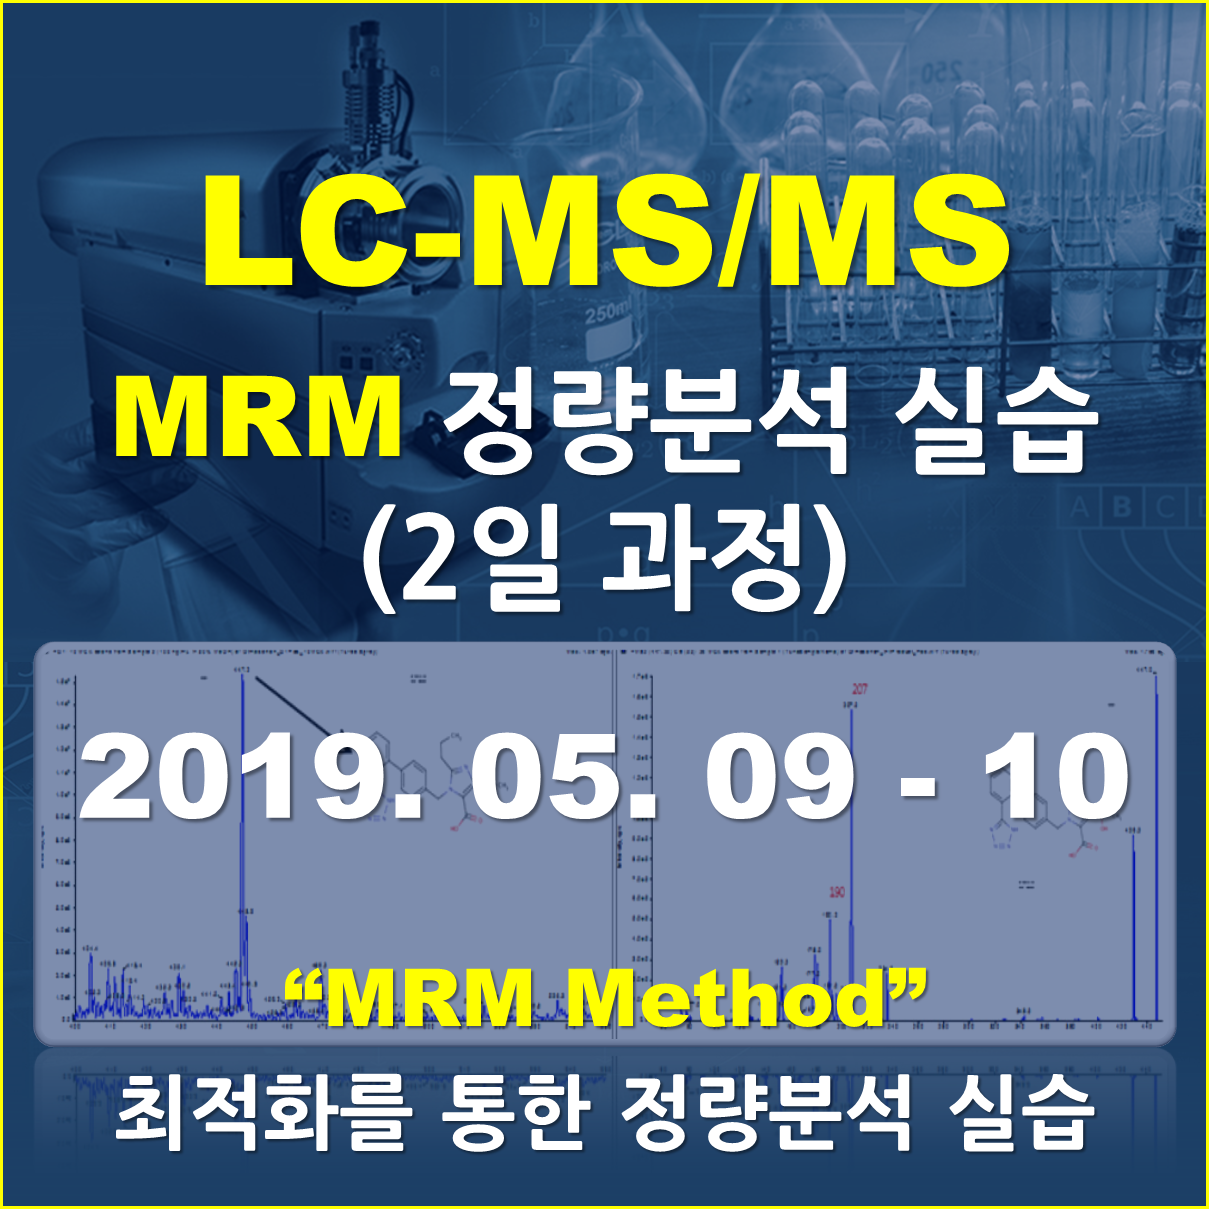 LC-MS/MS를 이용한MRM 정량분석실습 (2일 과정)